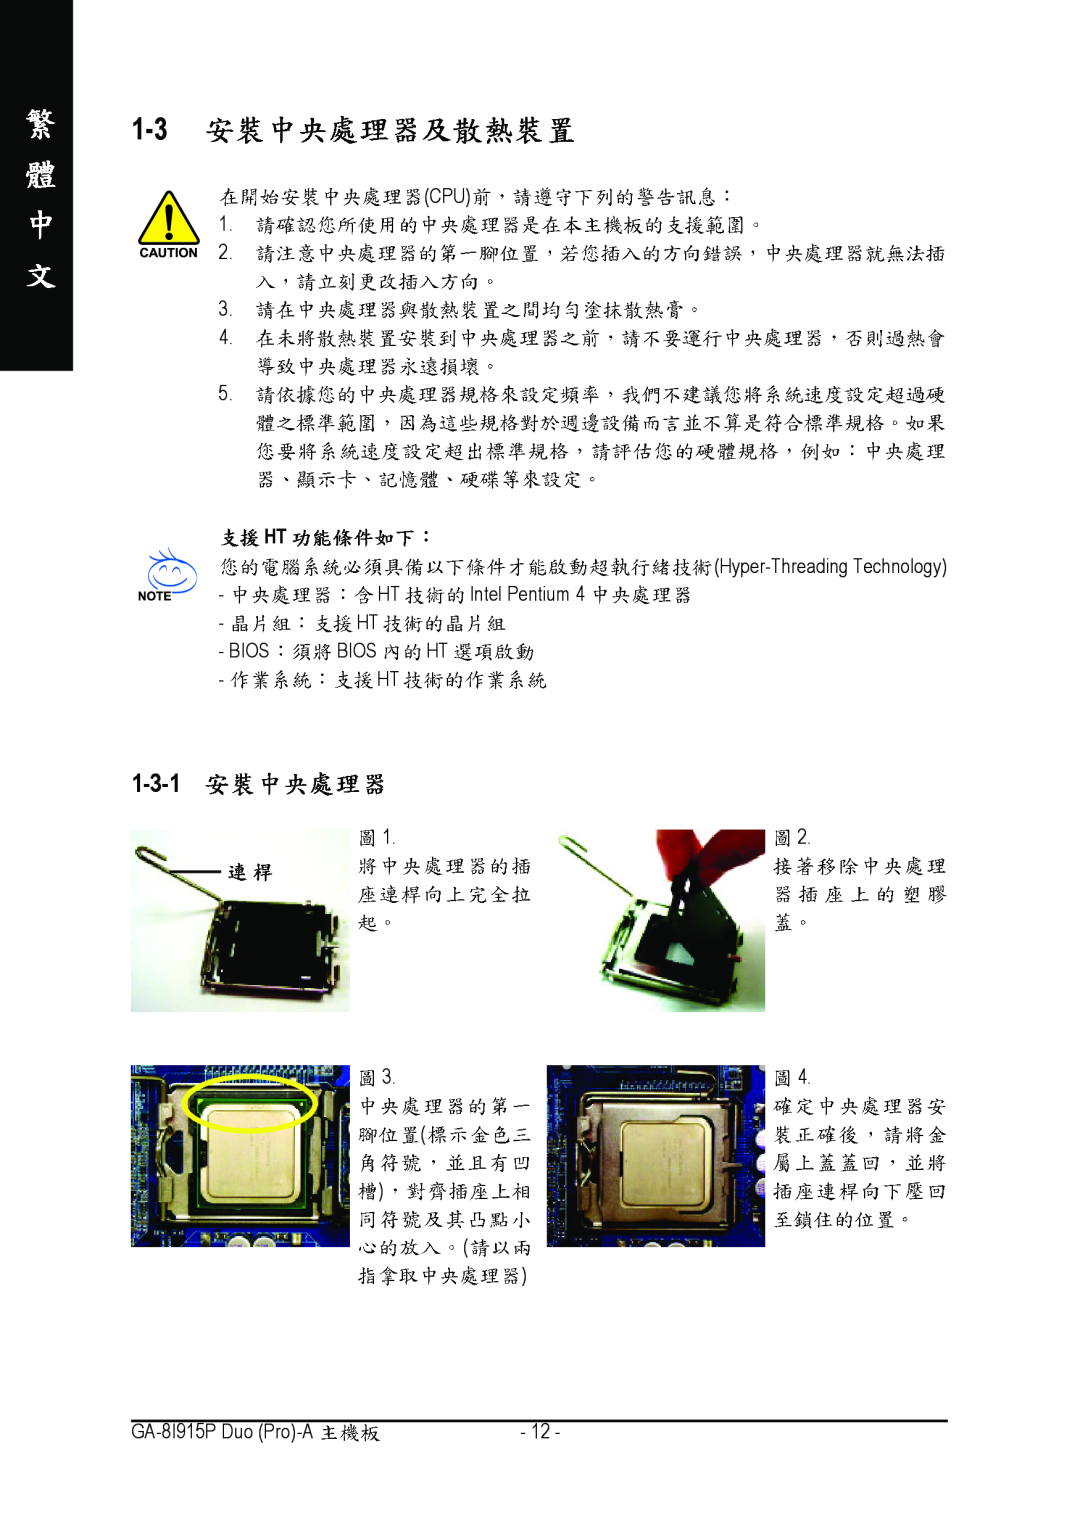 Gigabyte manual 1-3-1, Hyper-Threading Technology HT Intel Pentium HT BIOS BIOS HT HT, GA-8I915P Duo Pro-A 